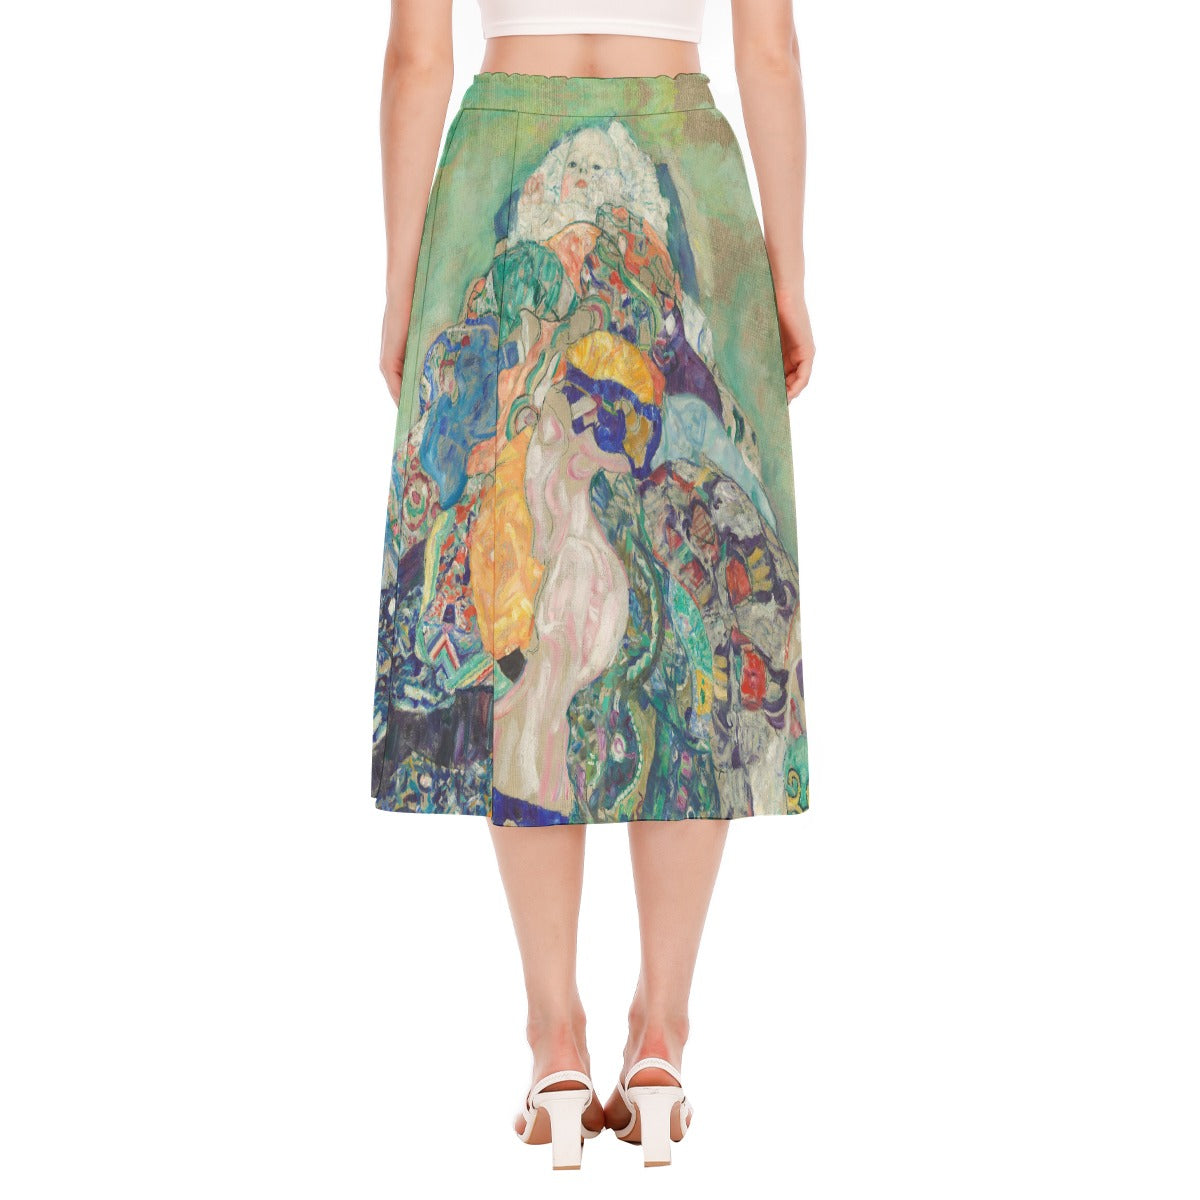 Lightweight chiffon skirt with vibrant digital print